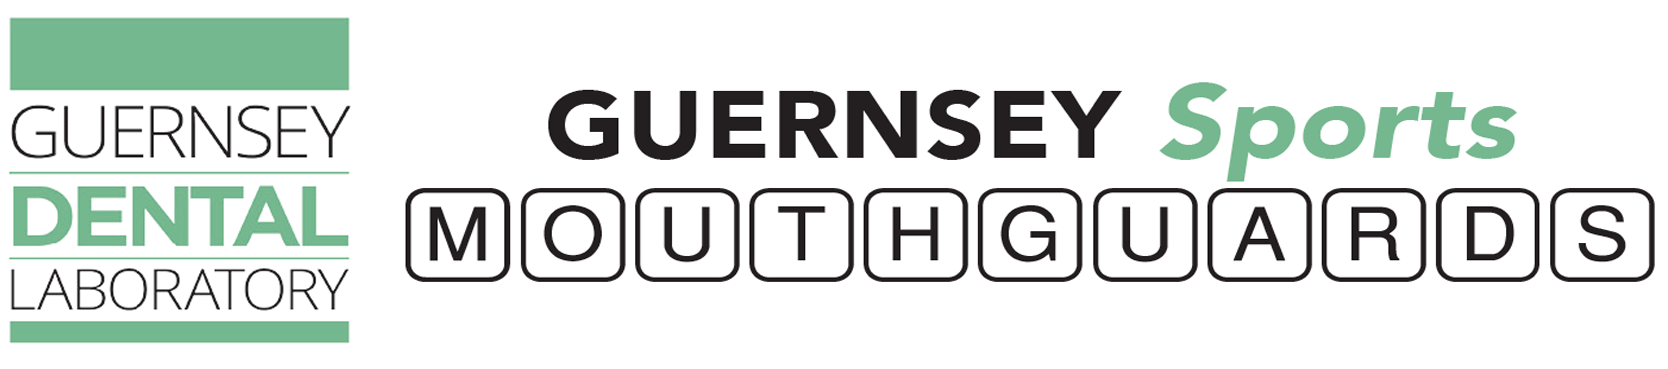 Guernsey Sports Mouthguards Logo